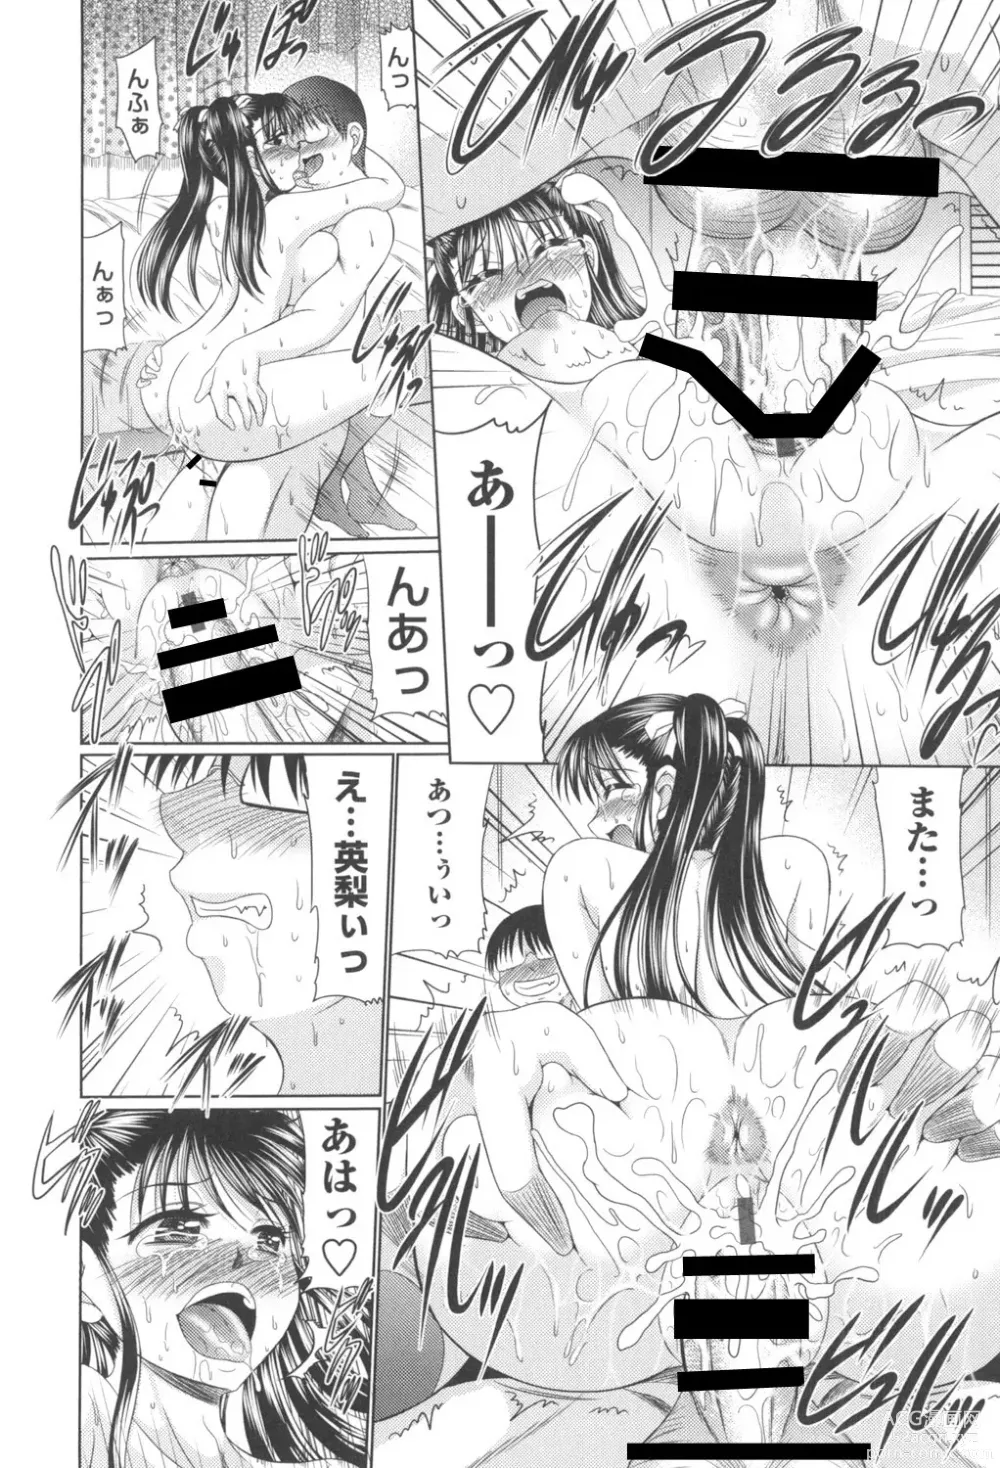 Page 175 of manga Otome Gokoro